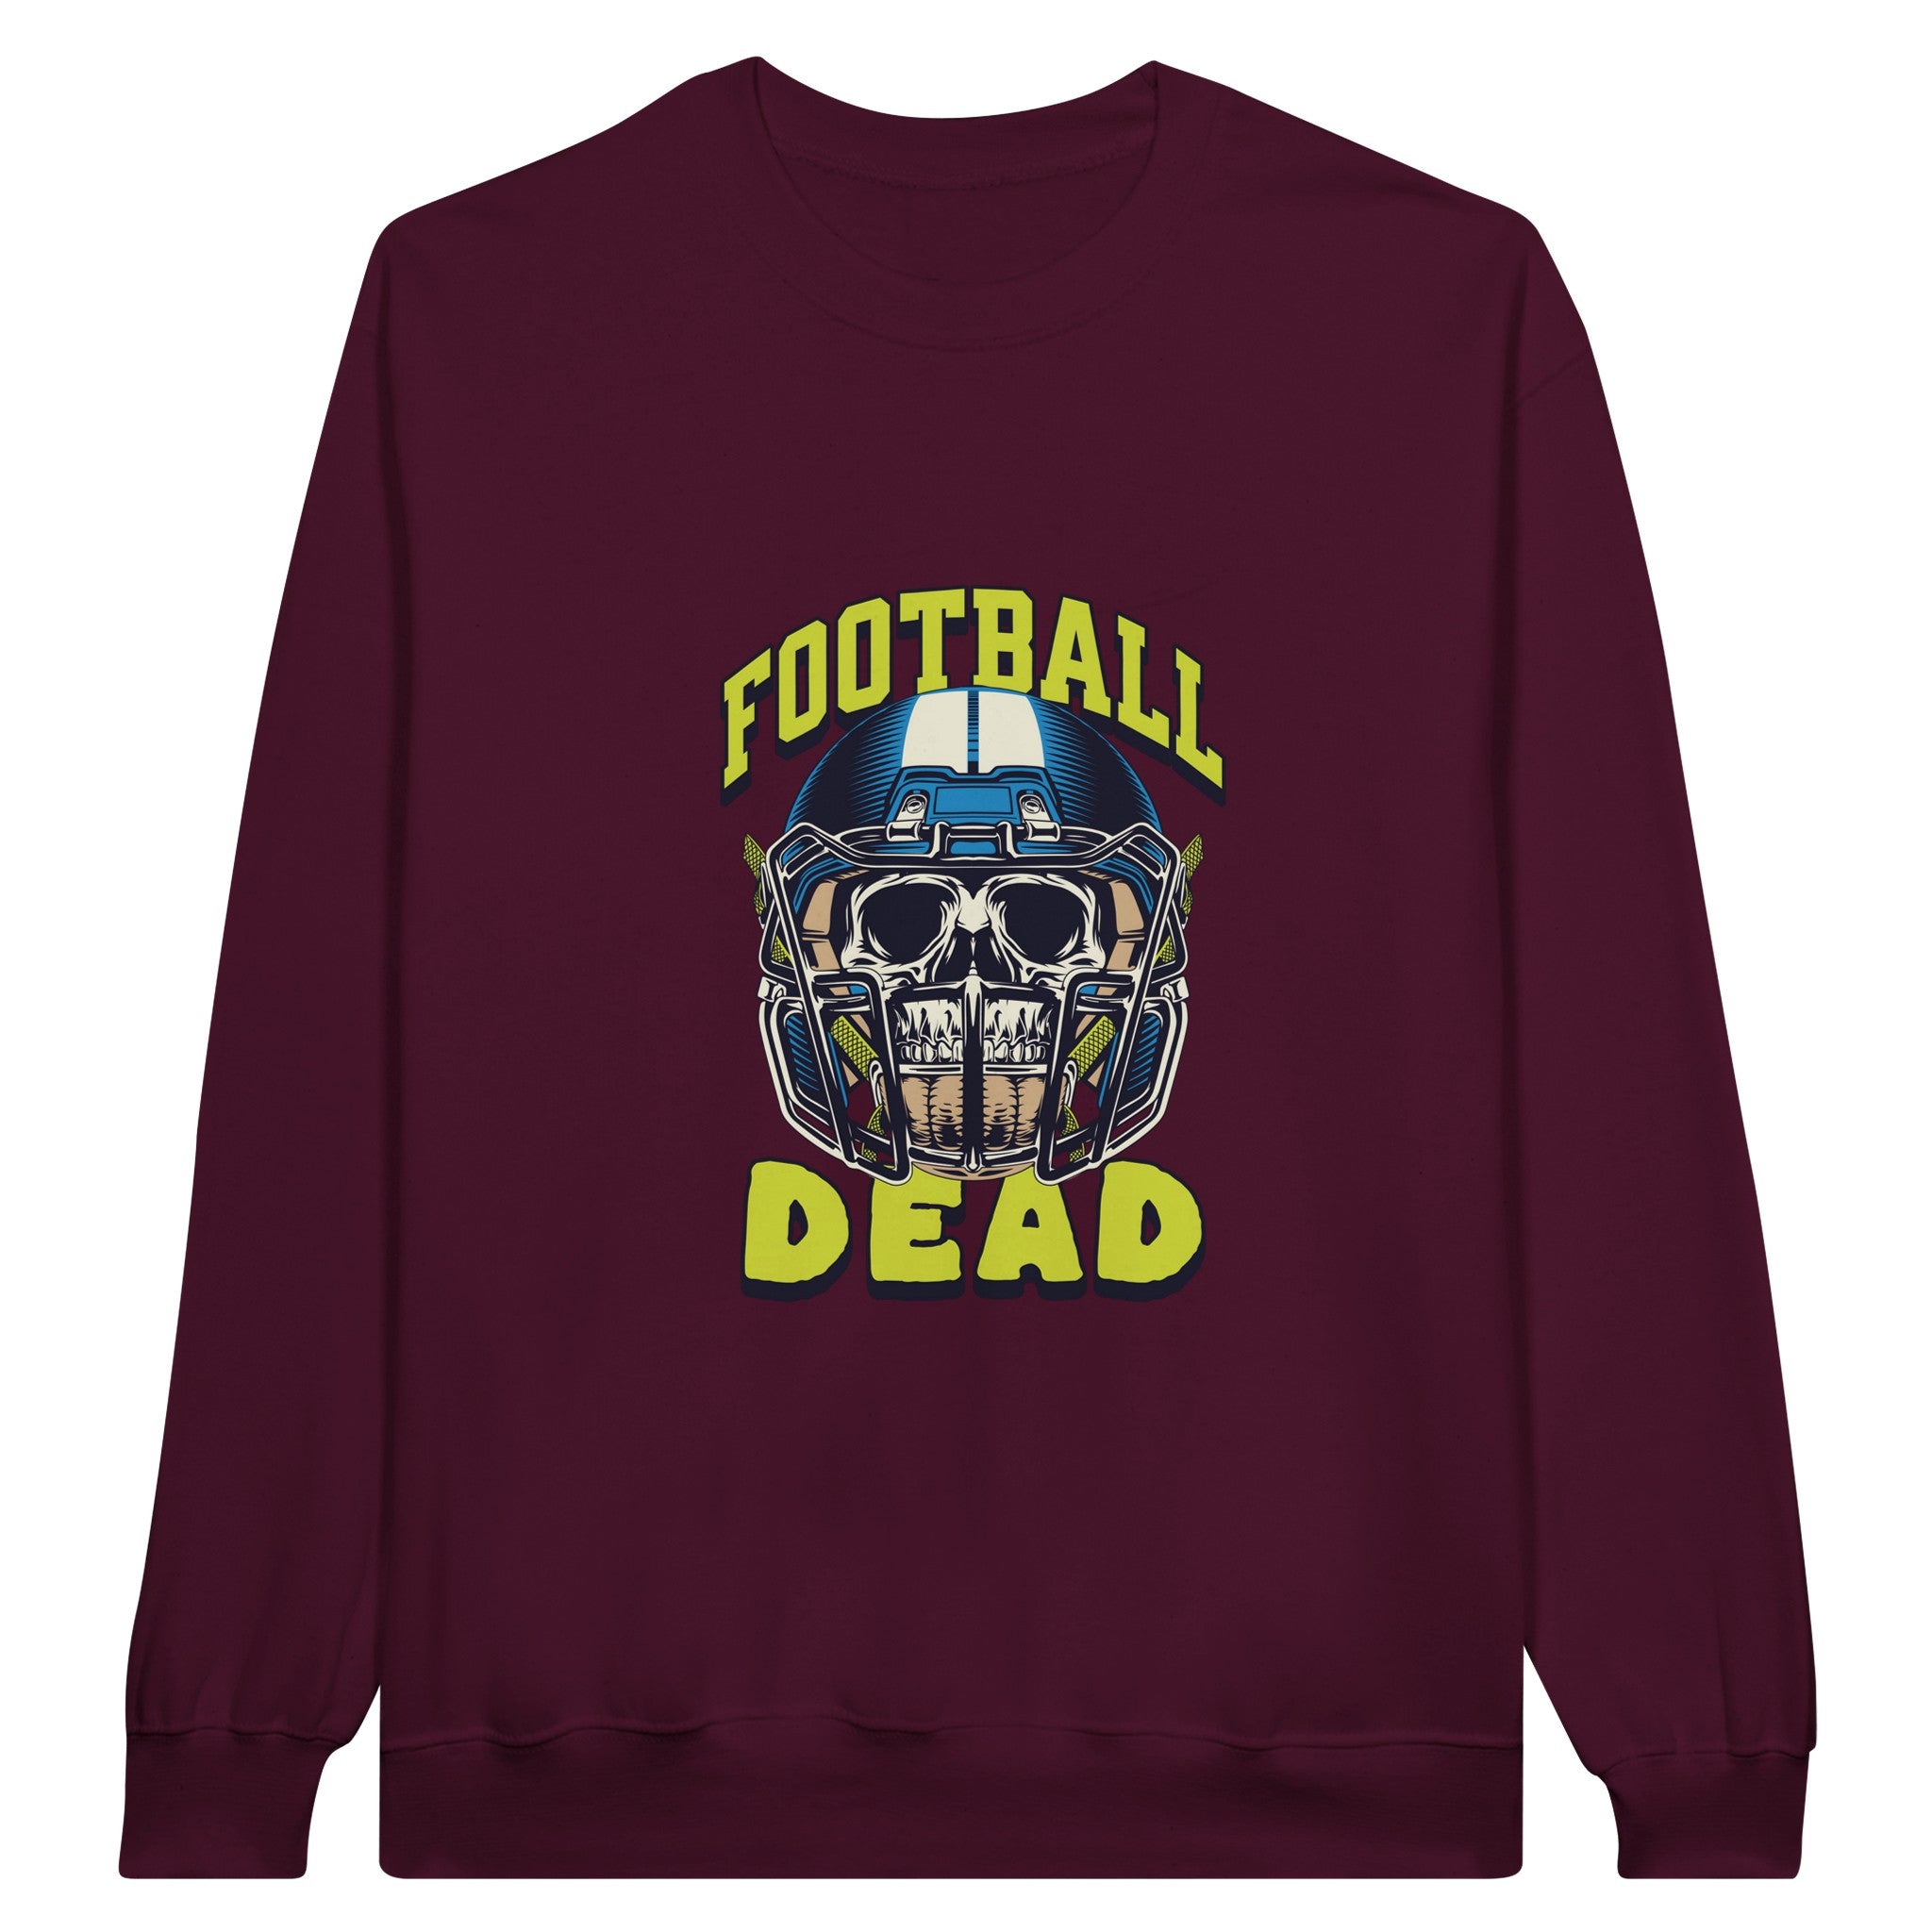 SORTYGO - Football Dead Men Sweatshirt in Maroon